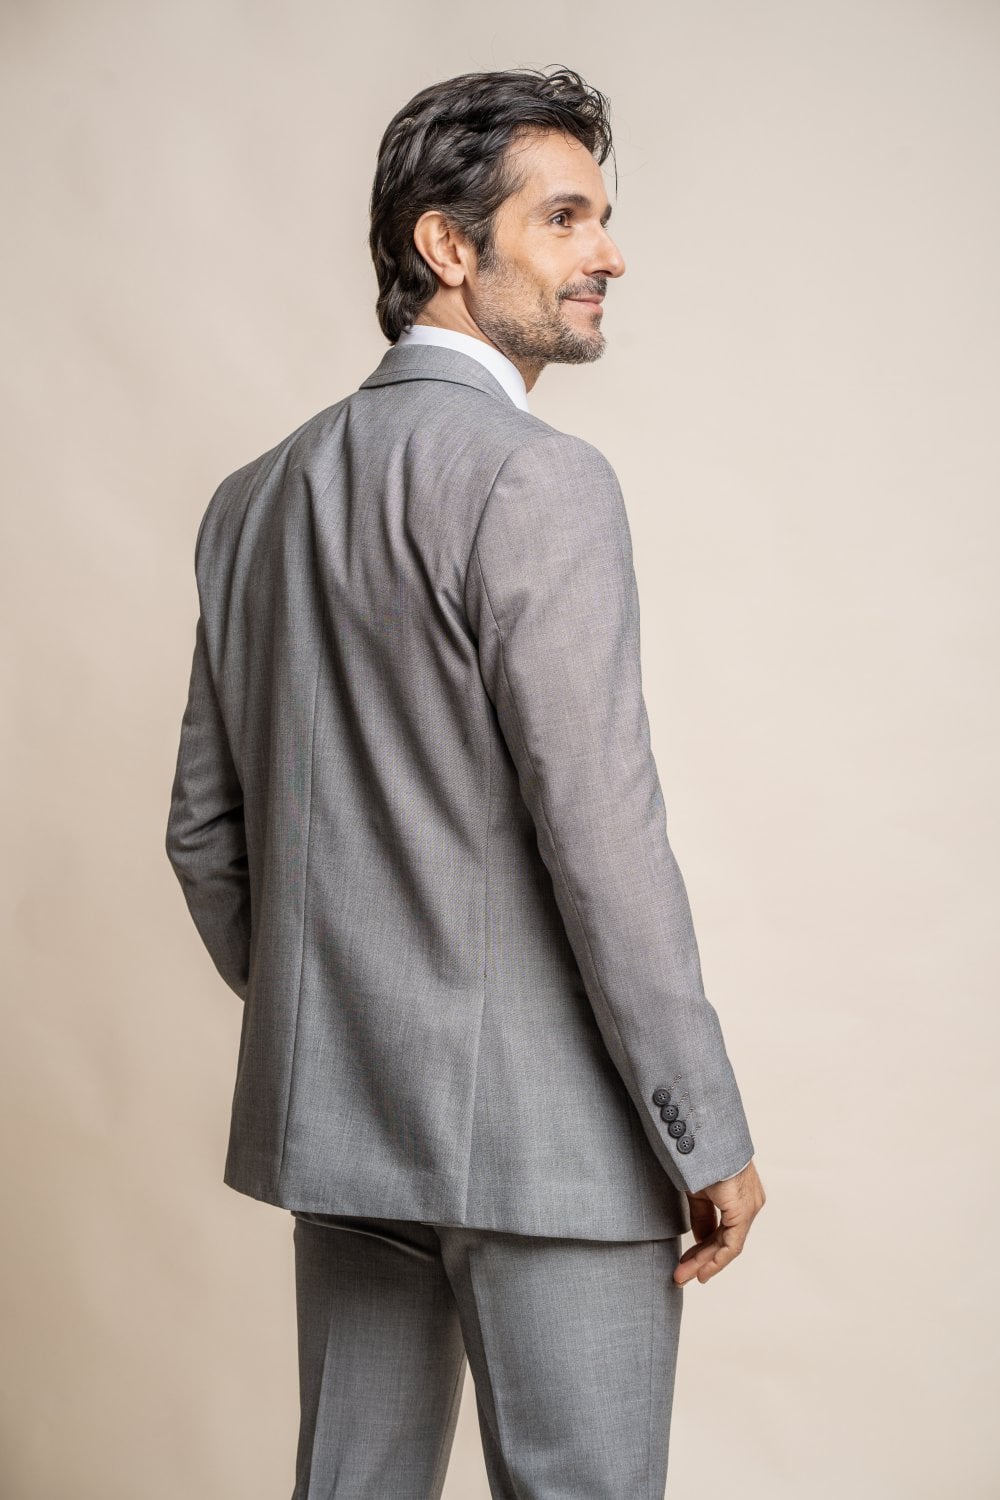 HOUSE OF CAVANI Reegan Grey Long Three Piece Suit